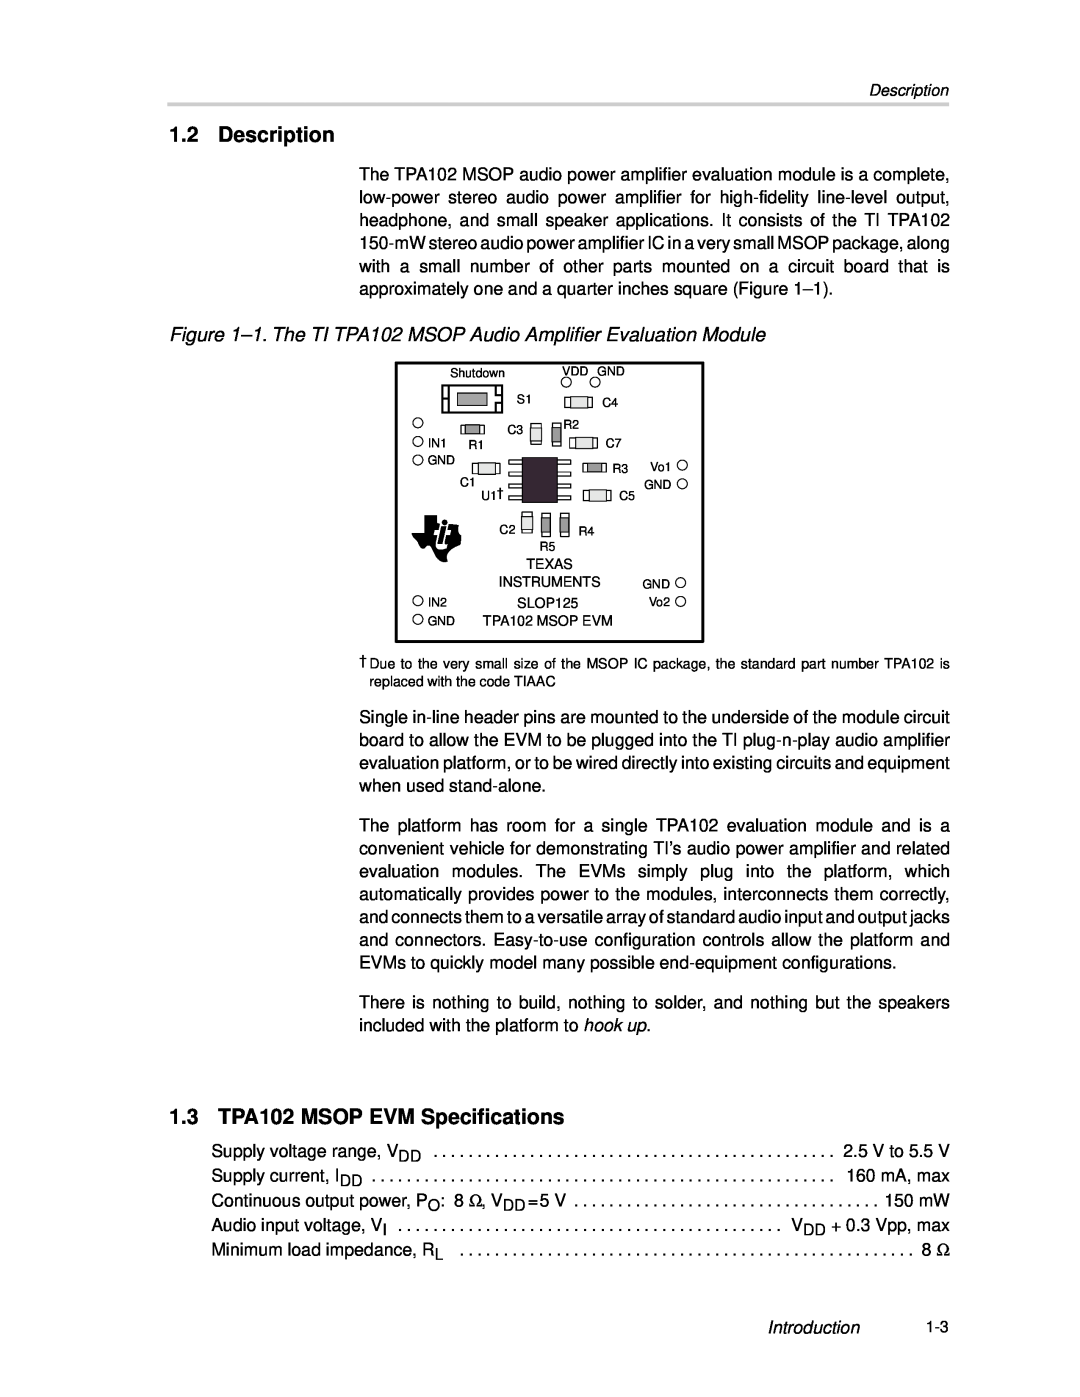 Texas Instruments manual Description, 1.3 TPA102 MSOP EVM Specifications, Introduction 